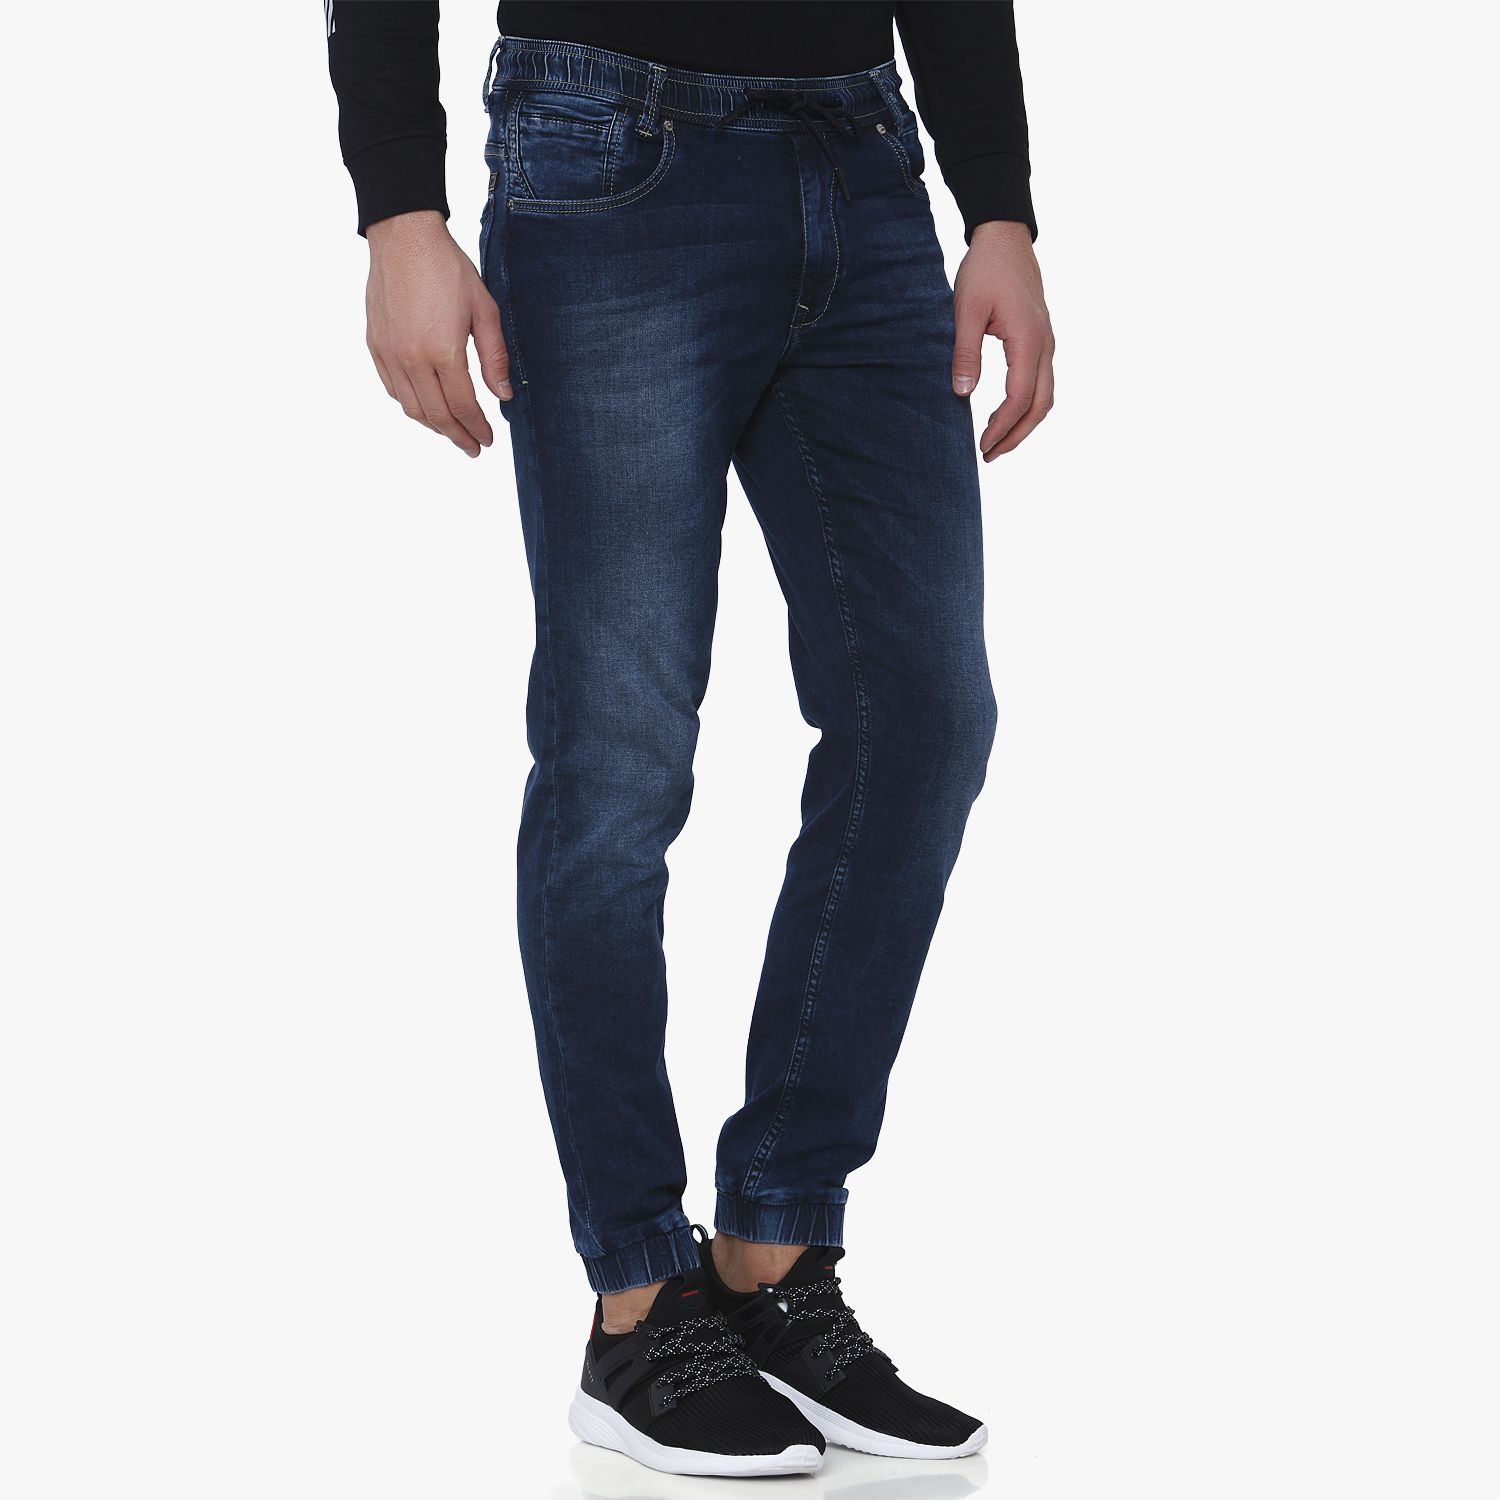 Mufti Dark Blue Regular Fit Jeans - Buy Mufti Dark Blue Regular Fit ...